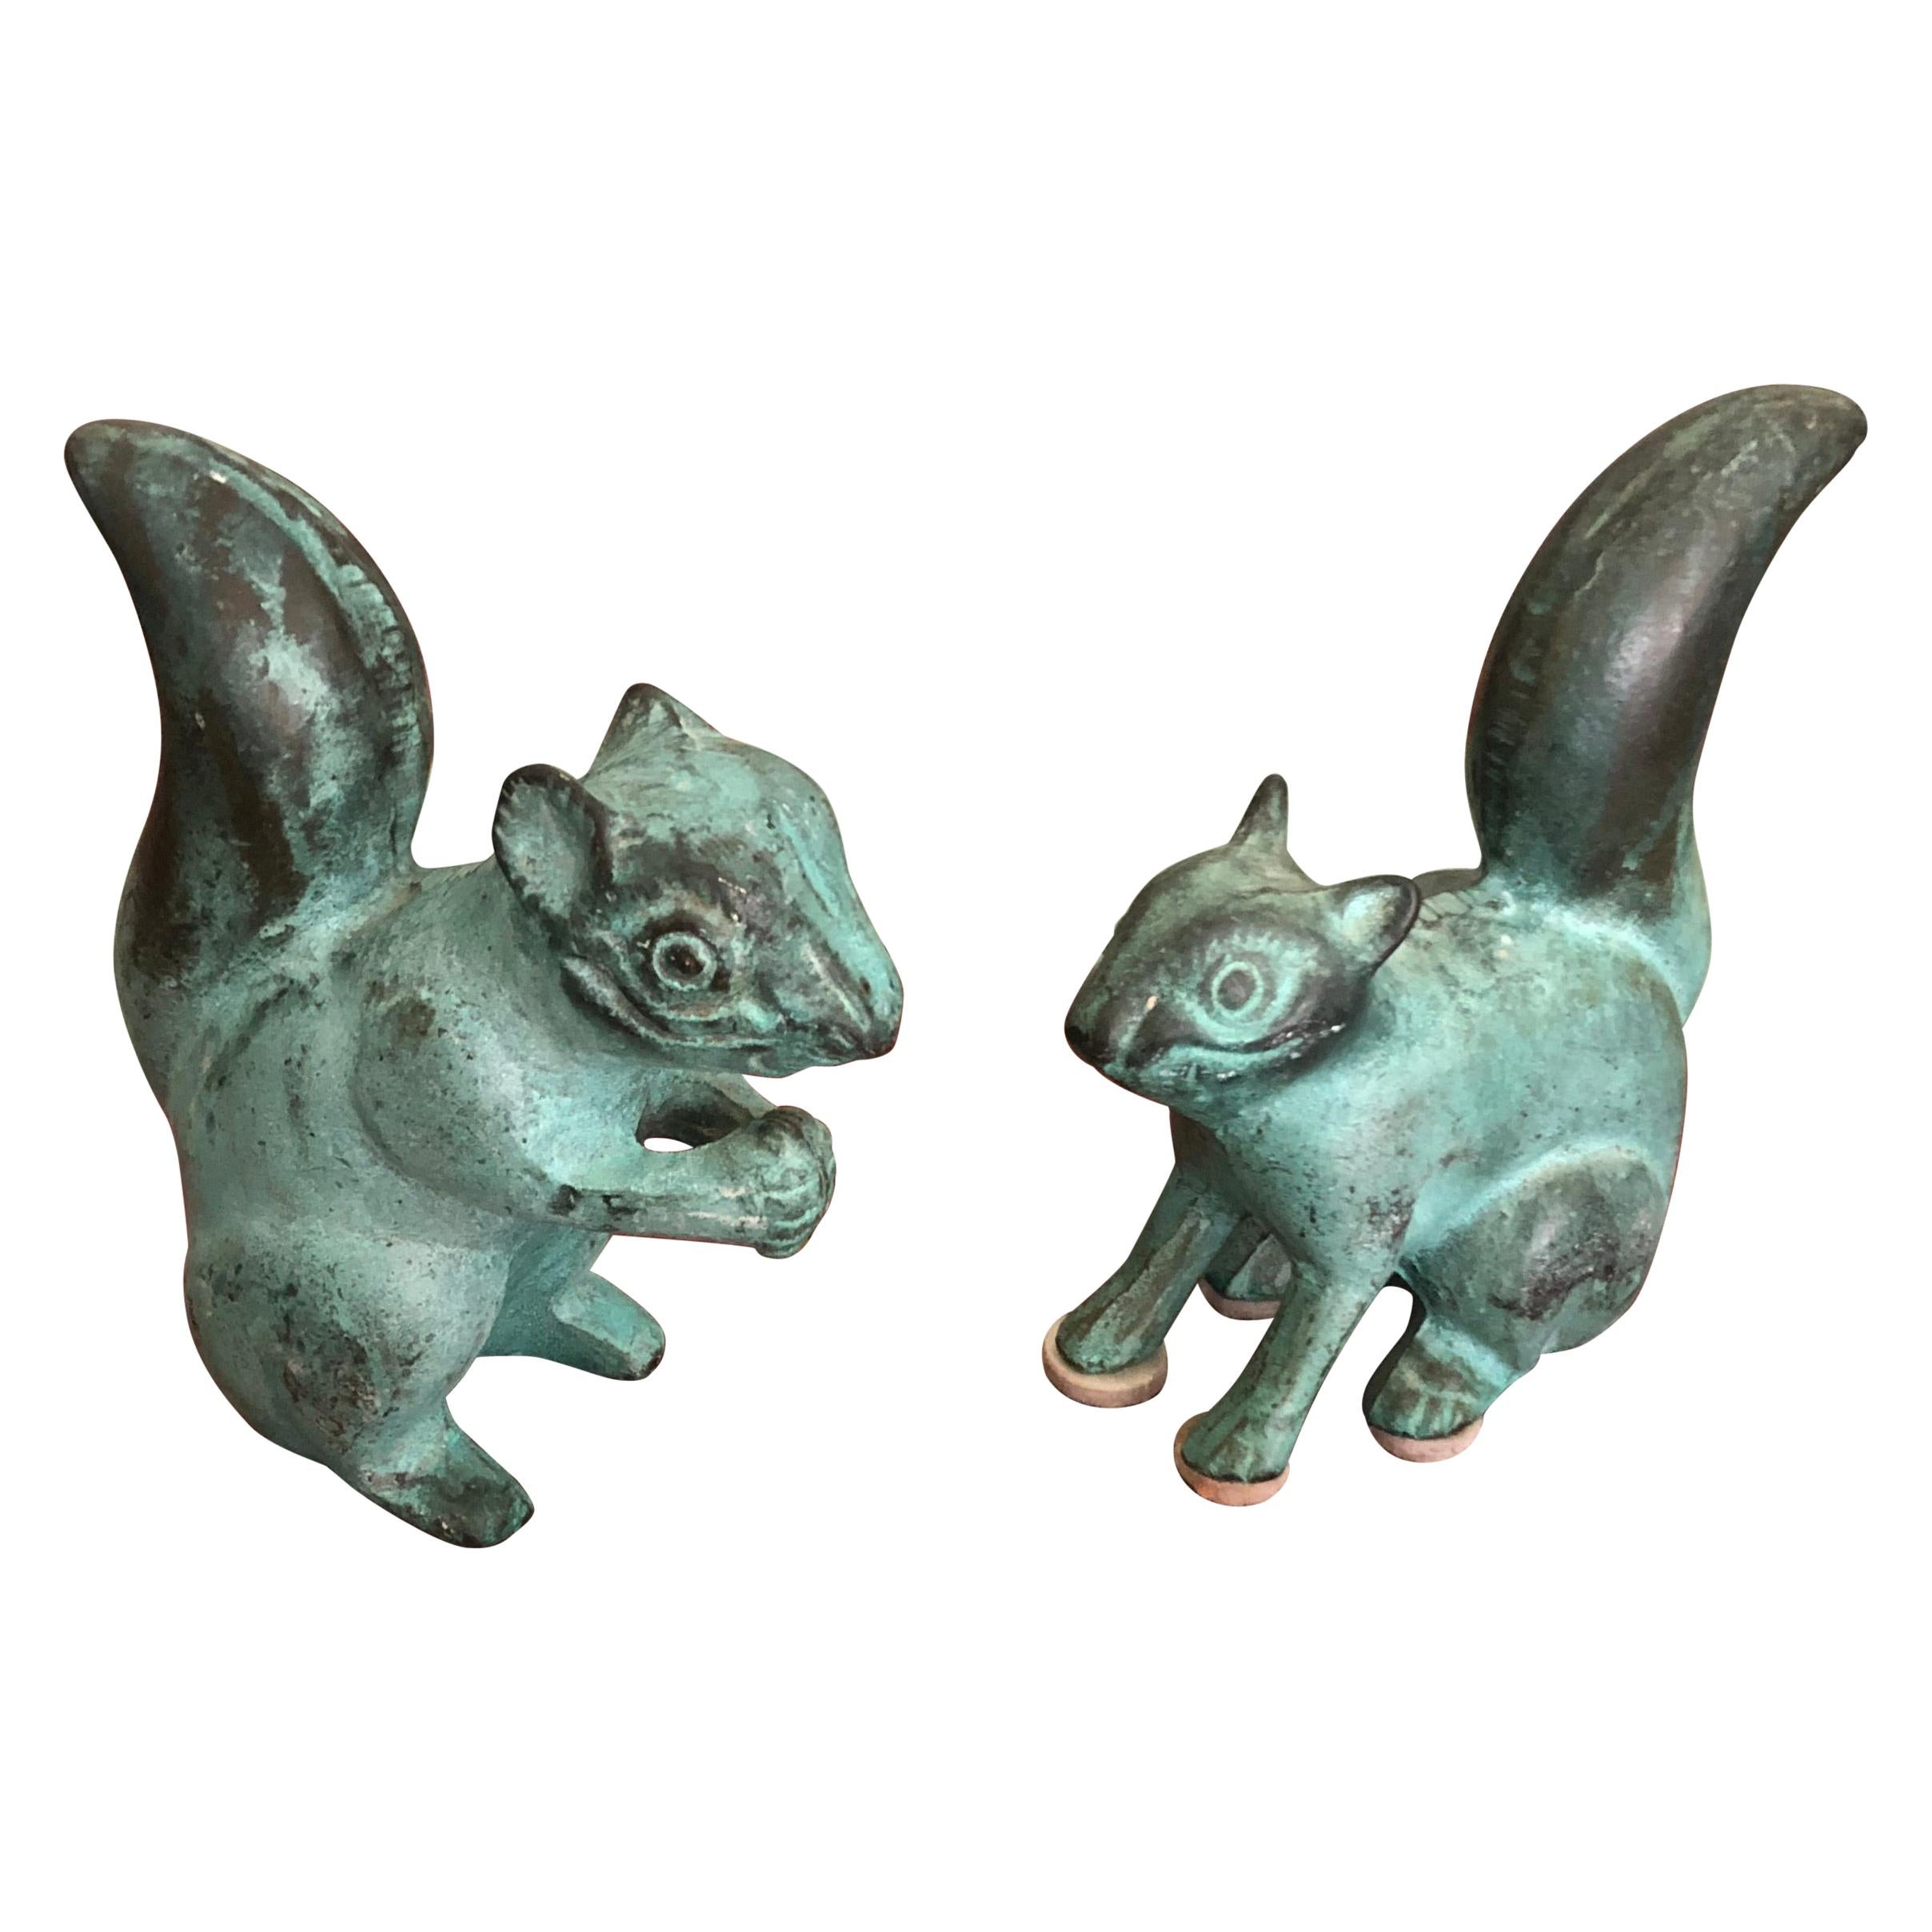 Adorable Pair of Squirrel Sculptures with Beautiful Verdigris Patina